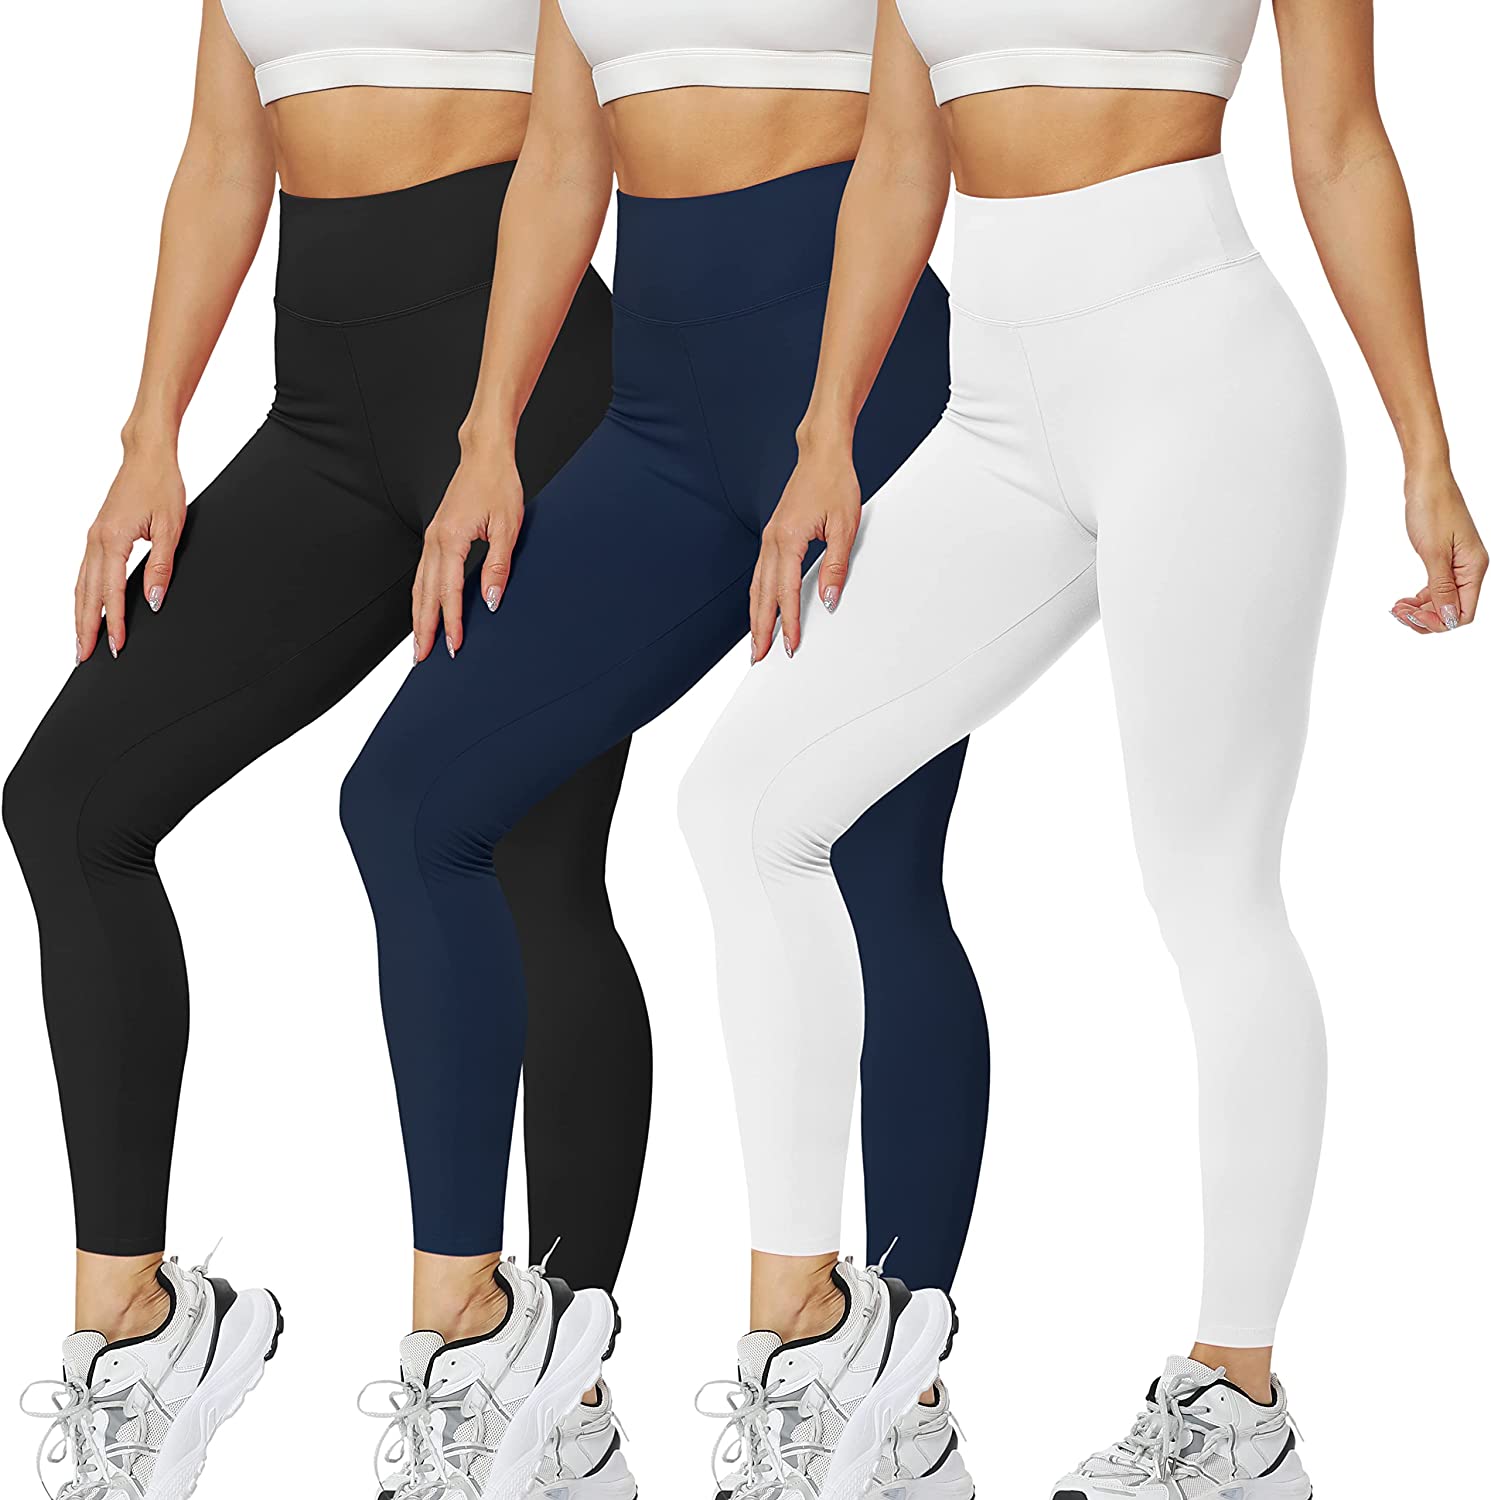  VALANDY Women's High Waist Tummy Control Yoga Pants Workout  Running Sports Tights Leggings Black One Size : VALANDY: Sports & Outdoors